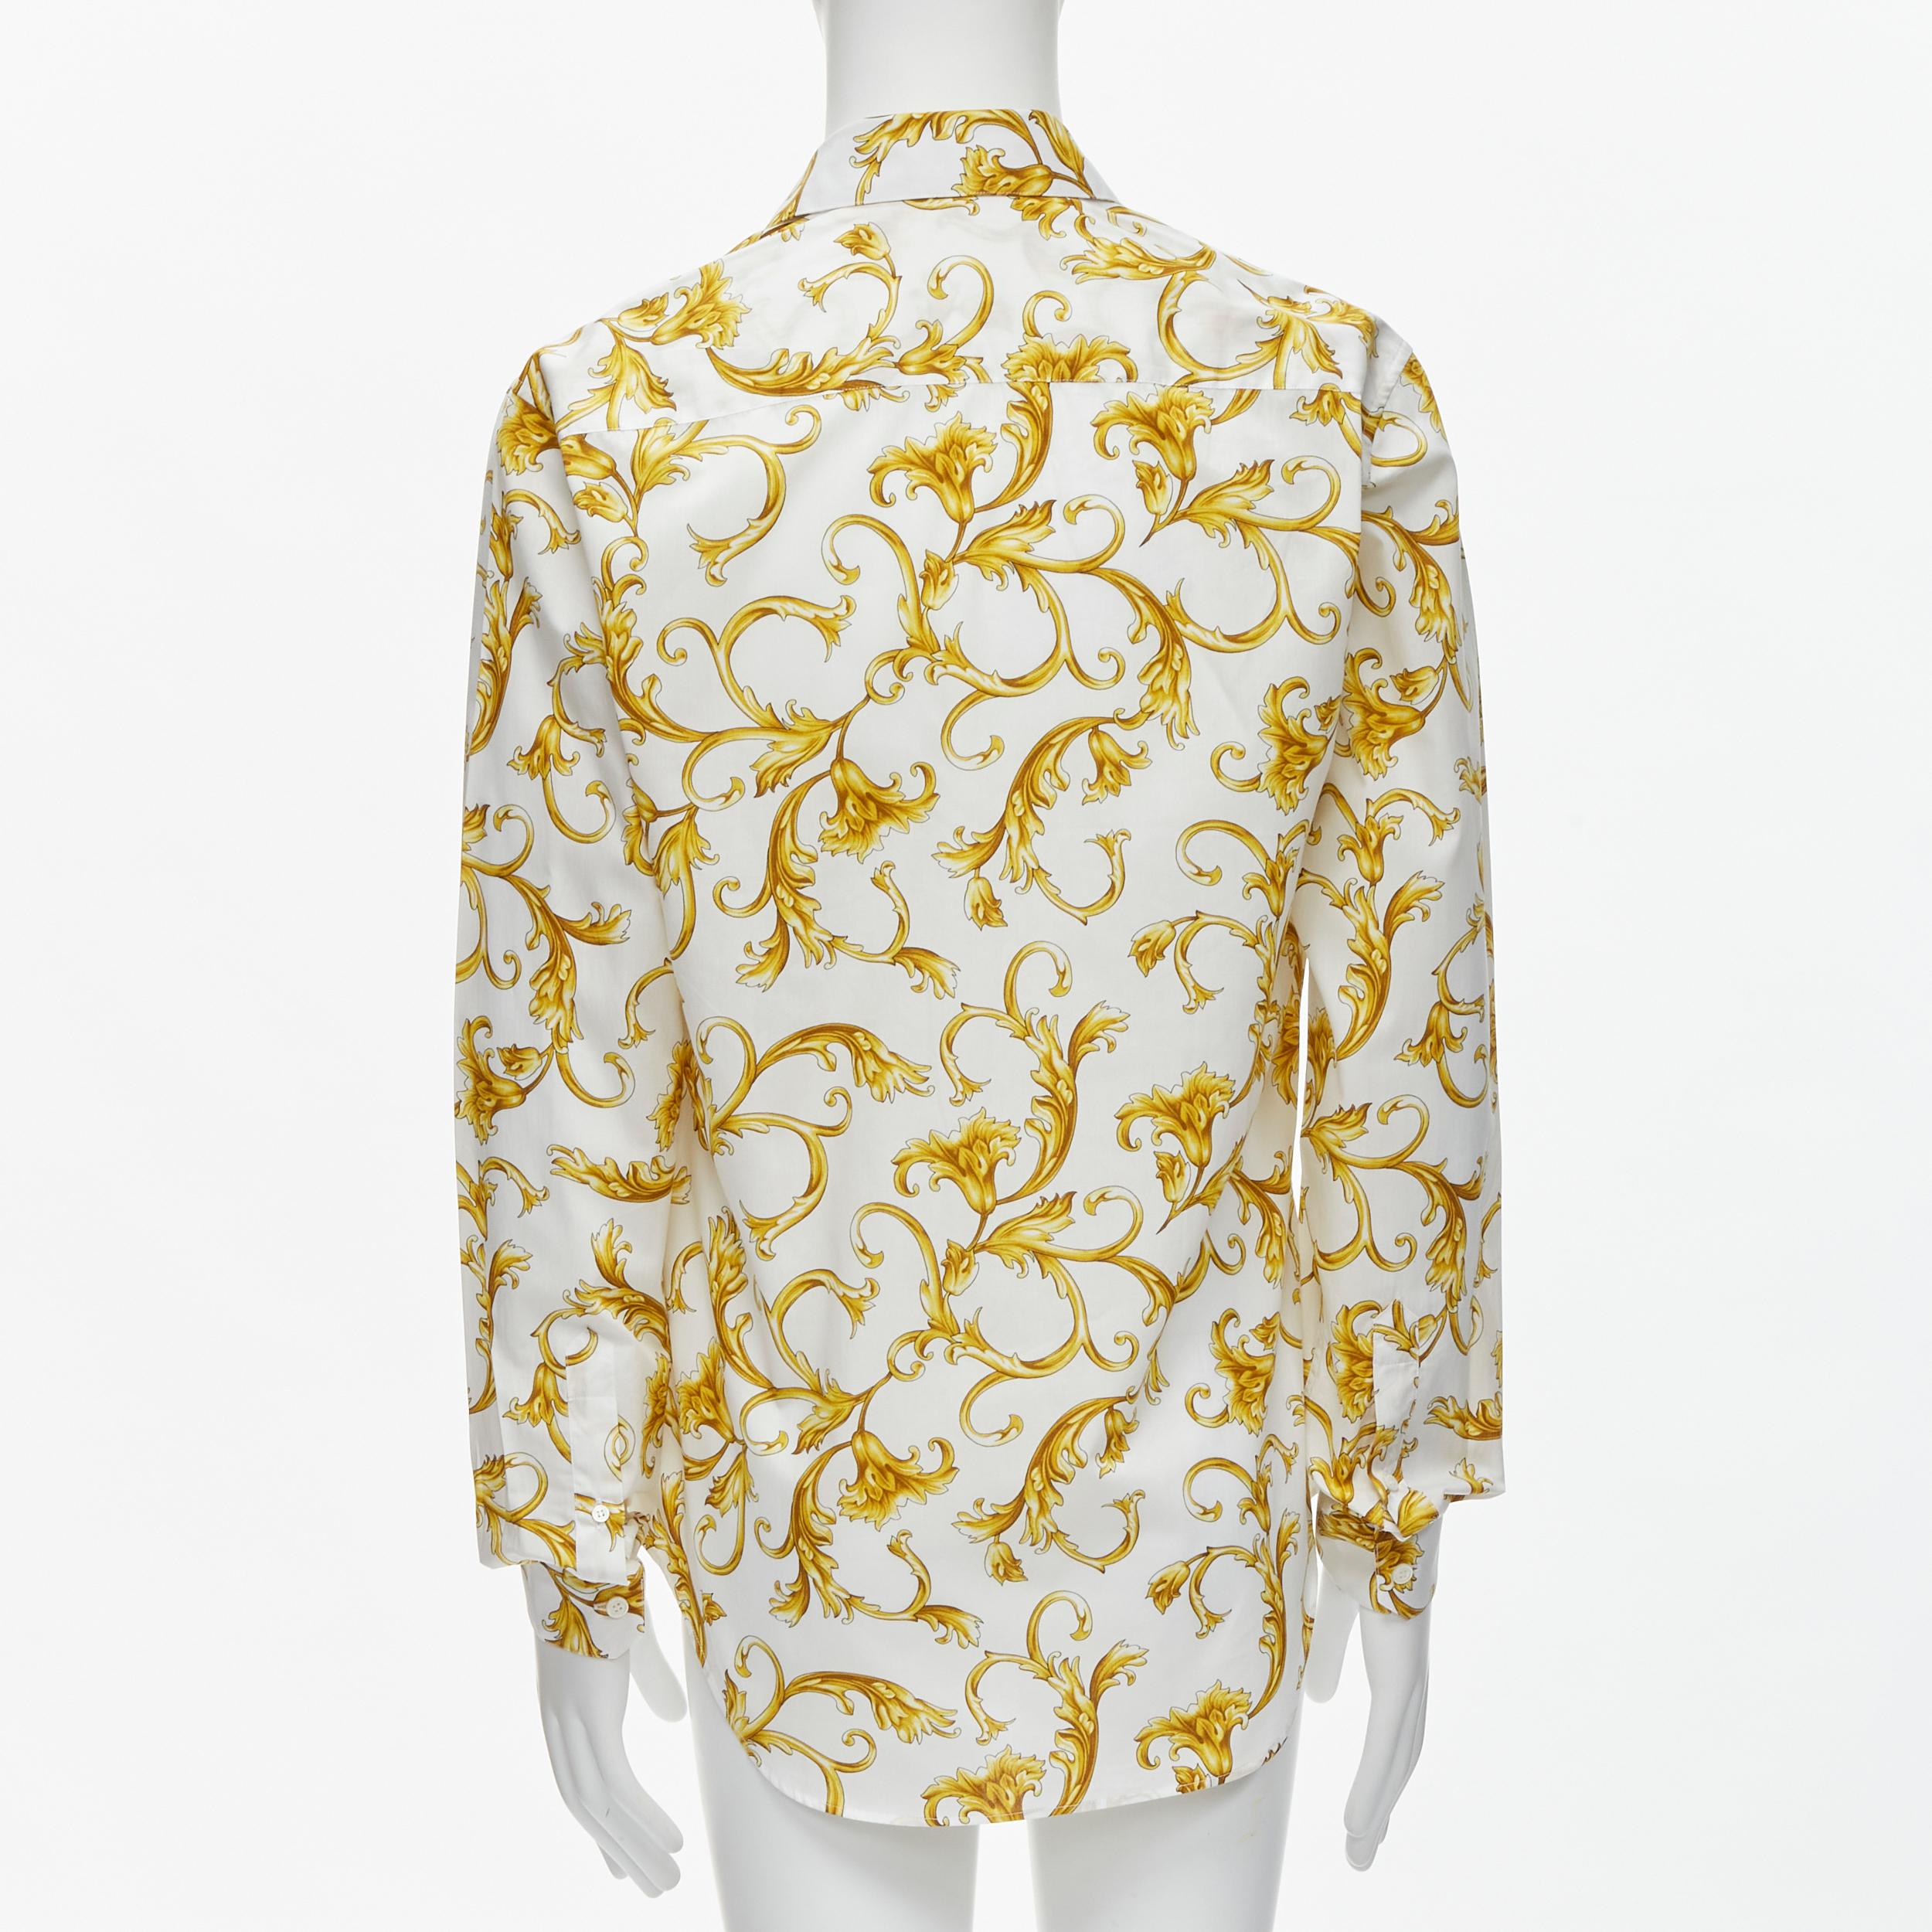 Men's new VERSACE Barocco Rococo white gold floral leaf cotton shirt EU40 M / L